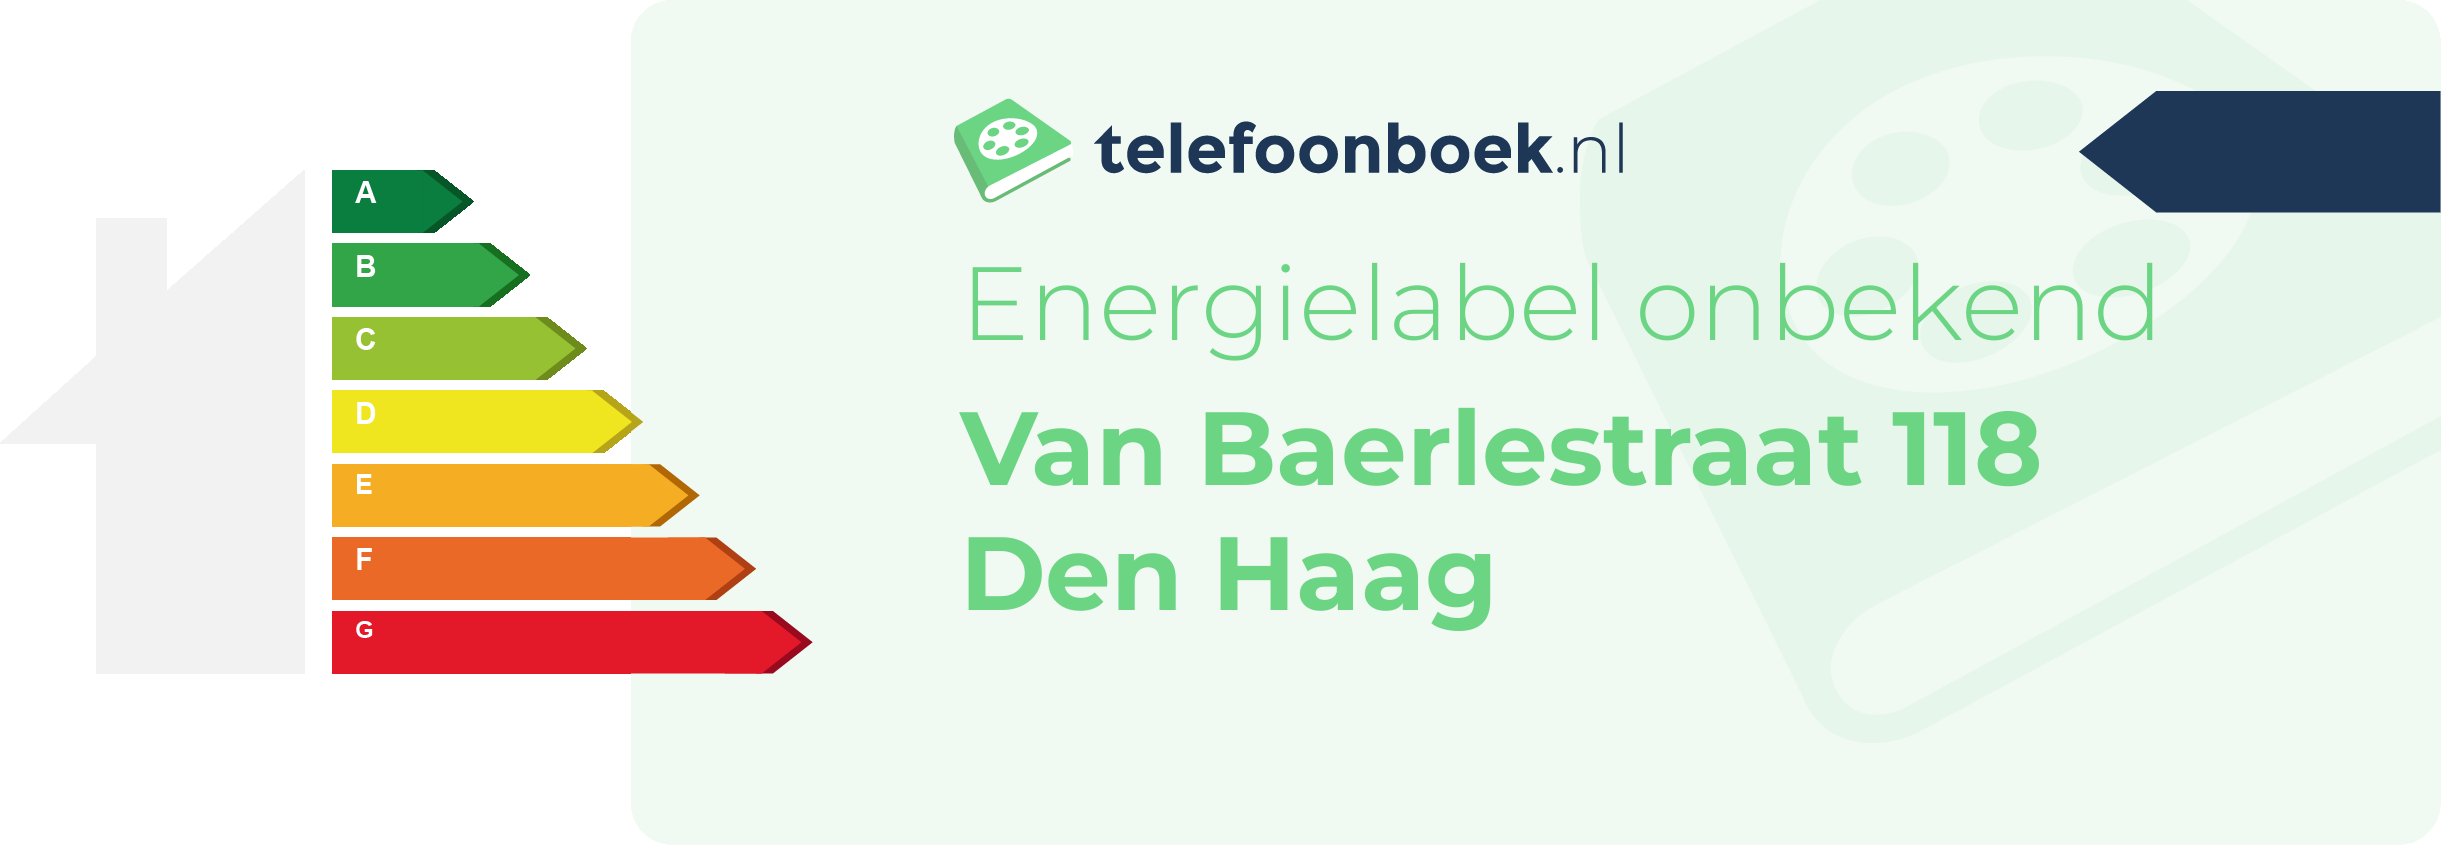 Energielabel Van Baerlestraat 118 Den Haag